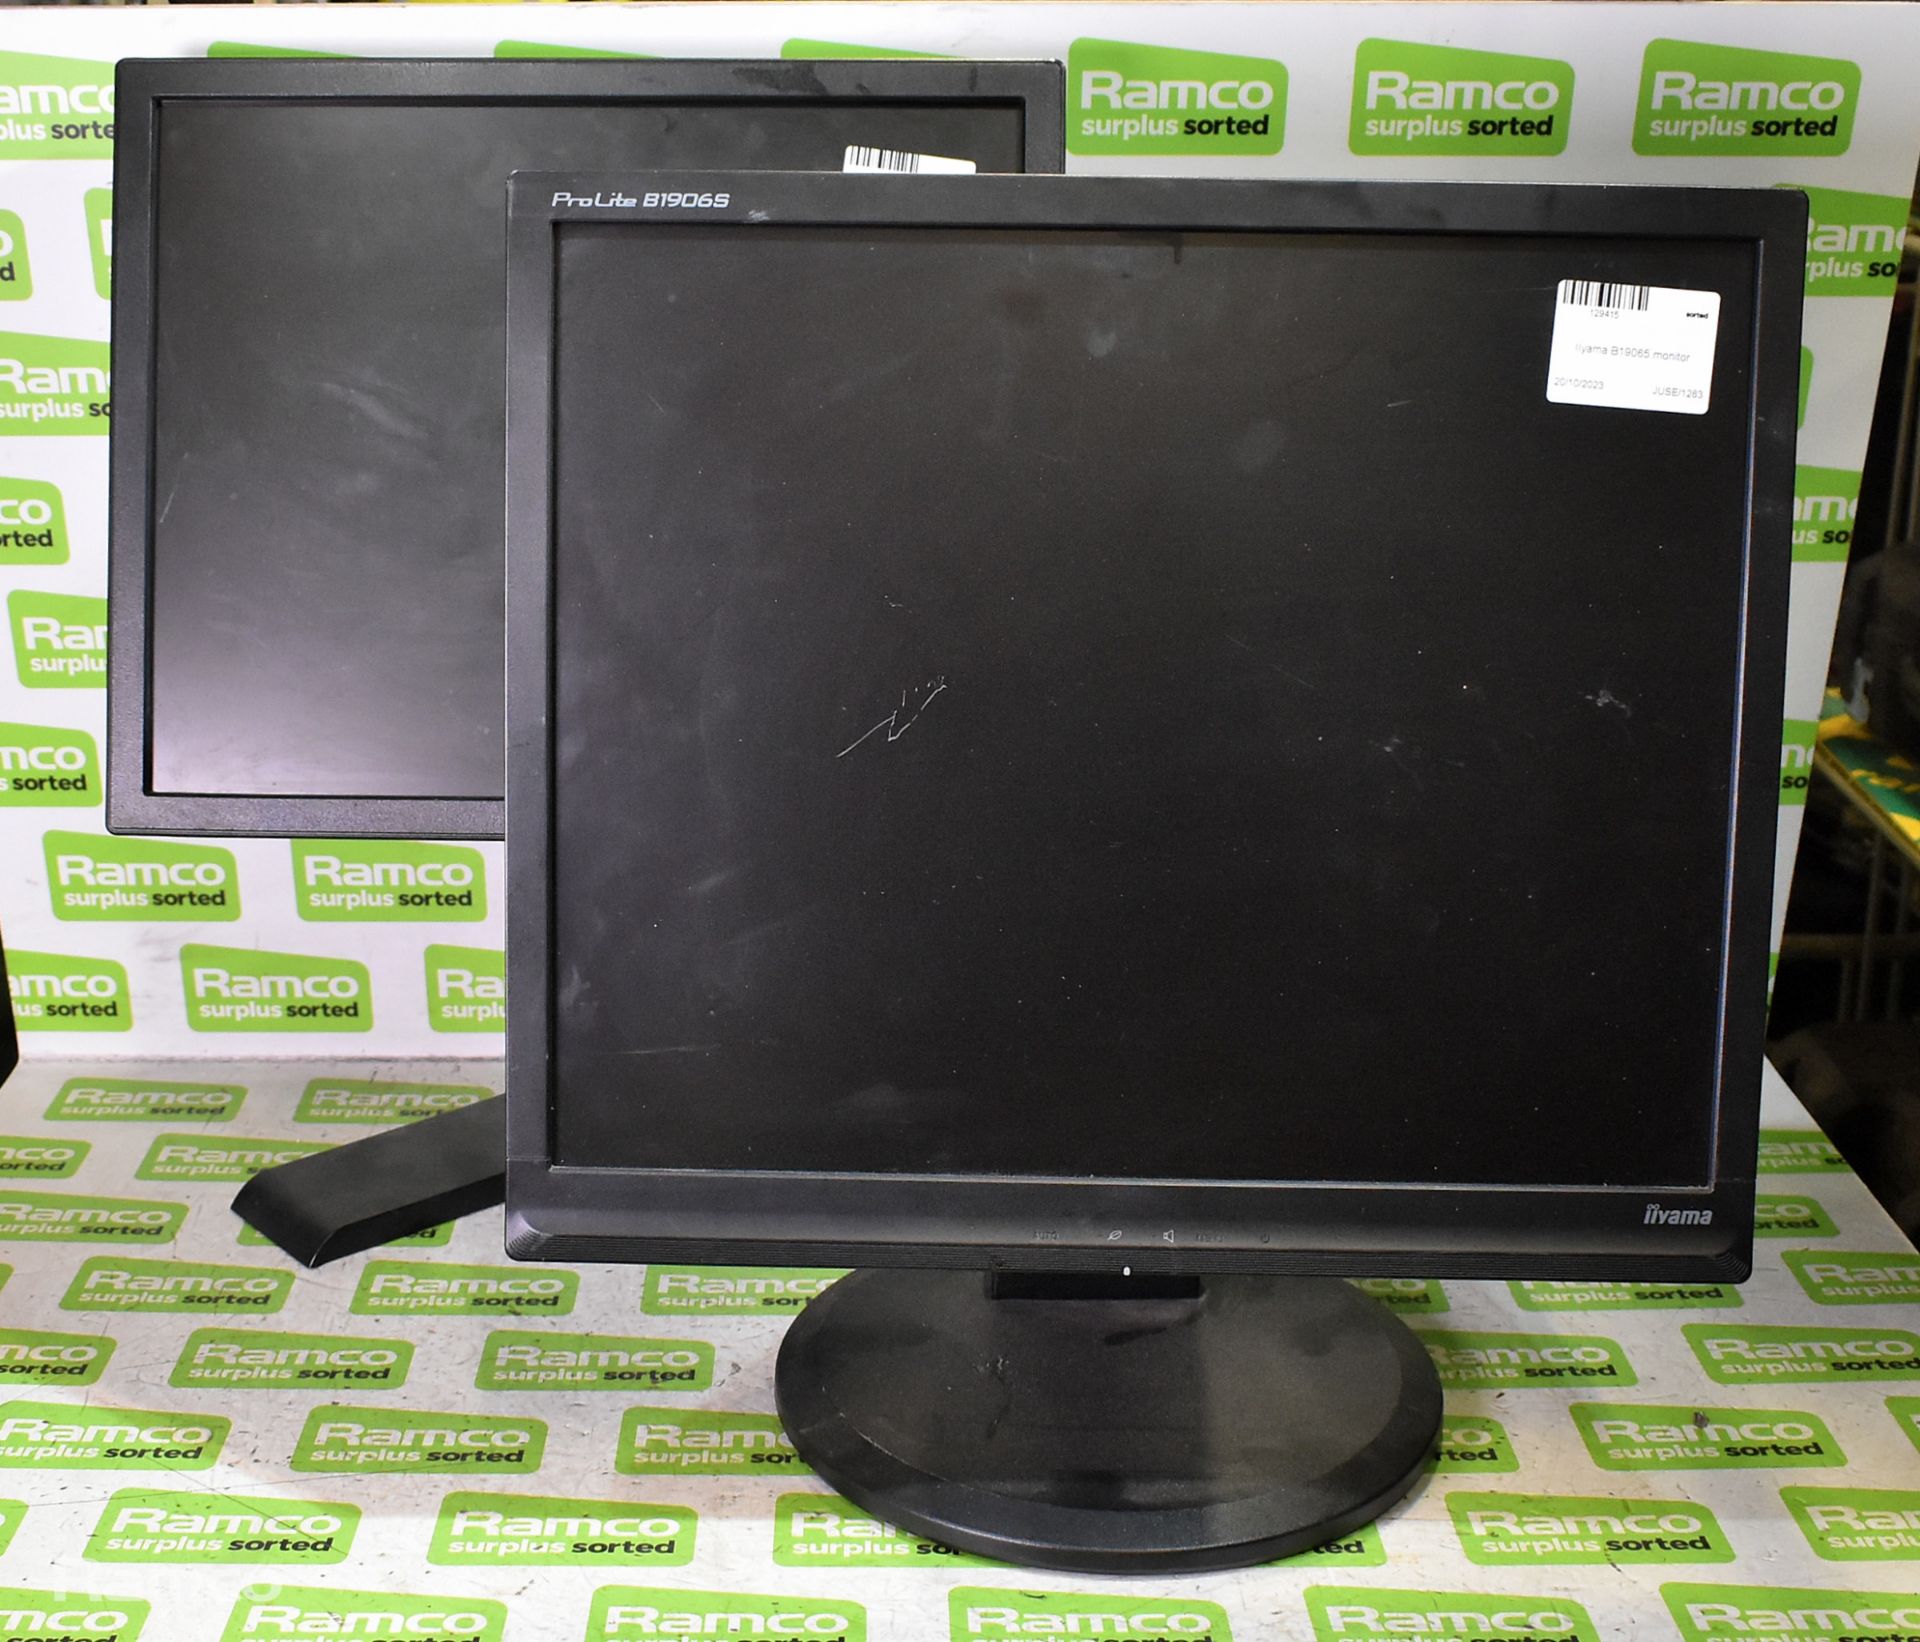 IIyama B19065 monitor, Dell E170SB computer monitor